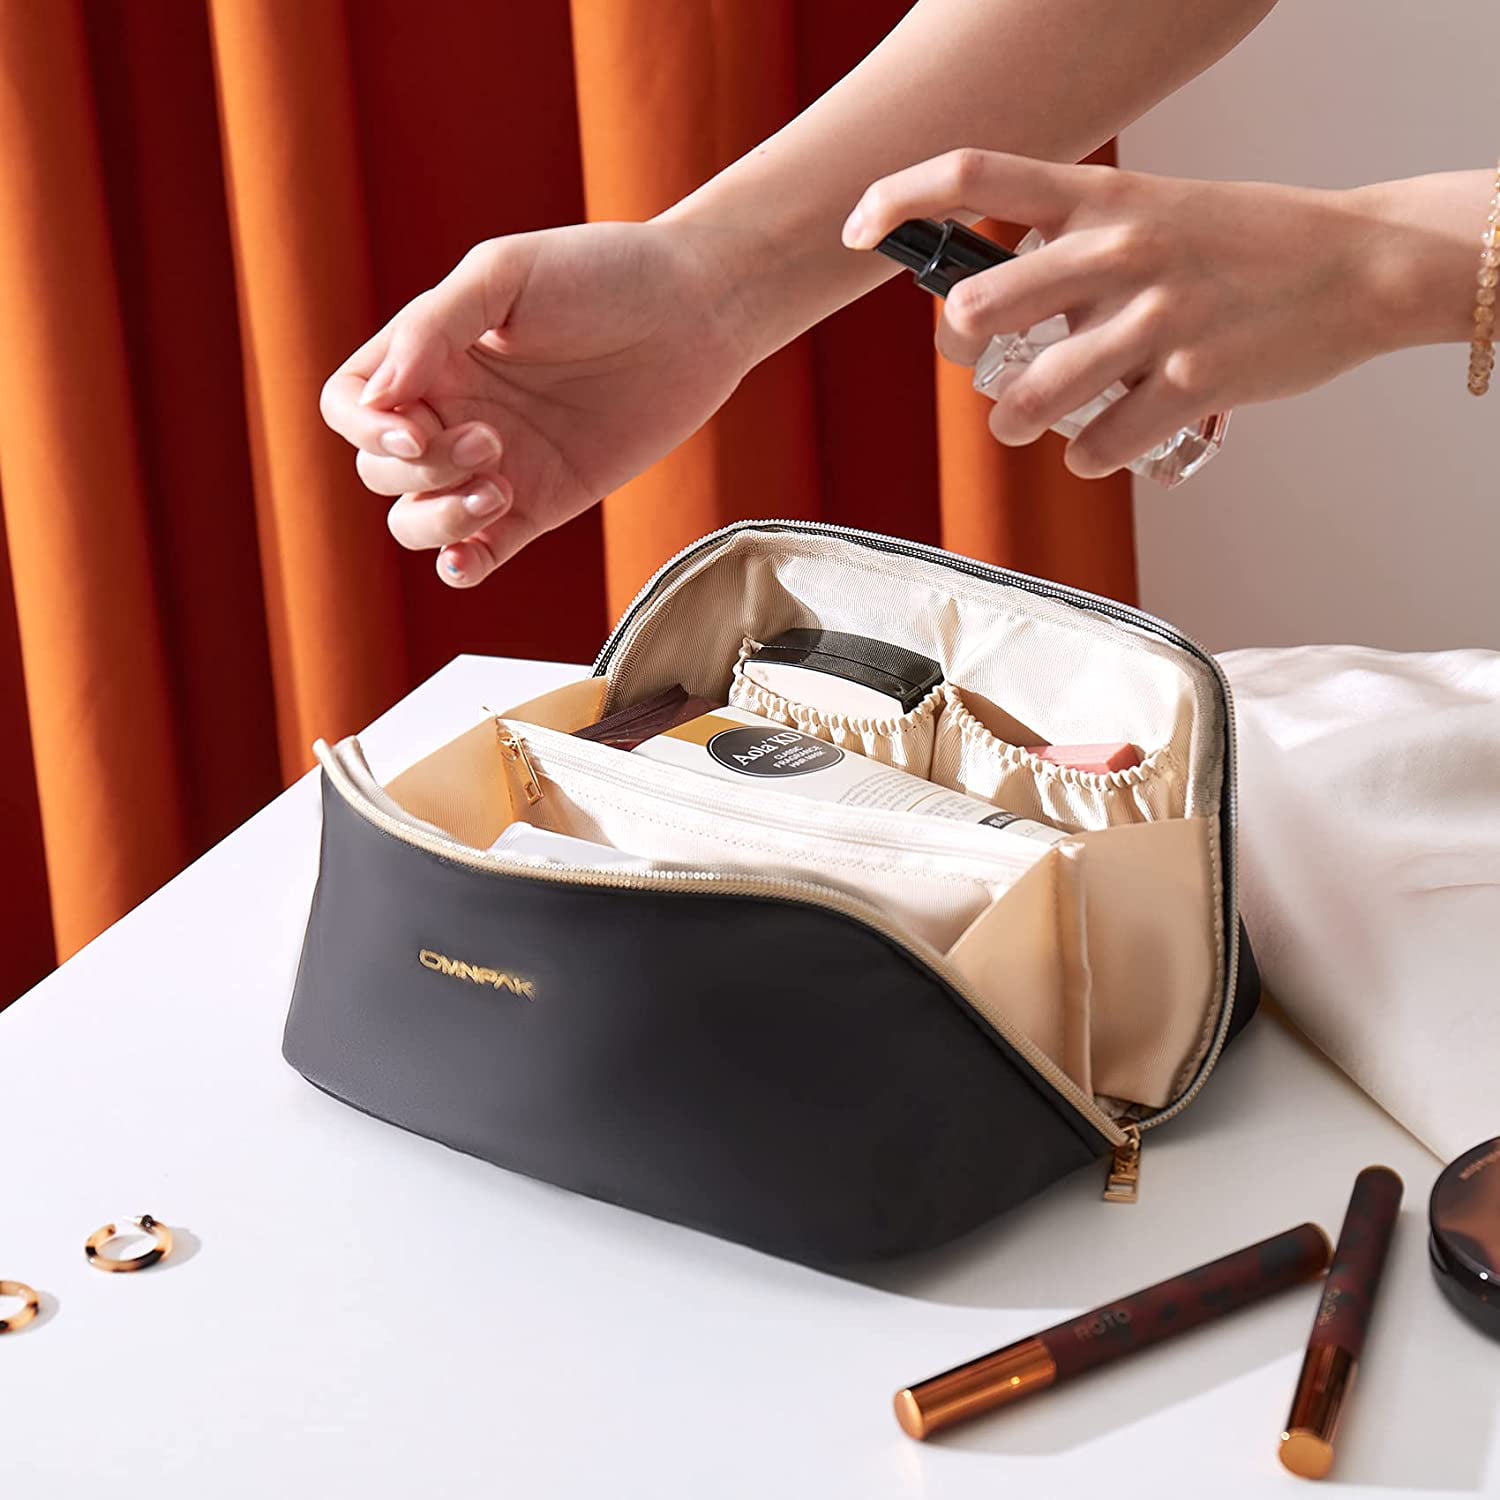 GetUSCart- Embla Cosmetic Bag - Makeup Bag Travel Pouch, Toiletry